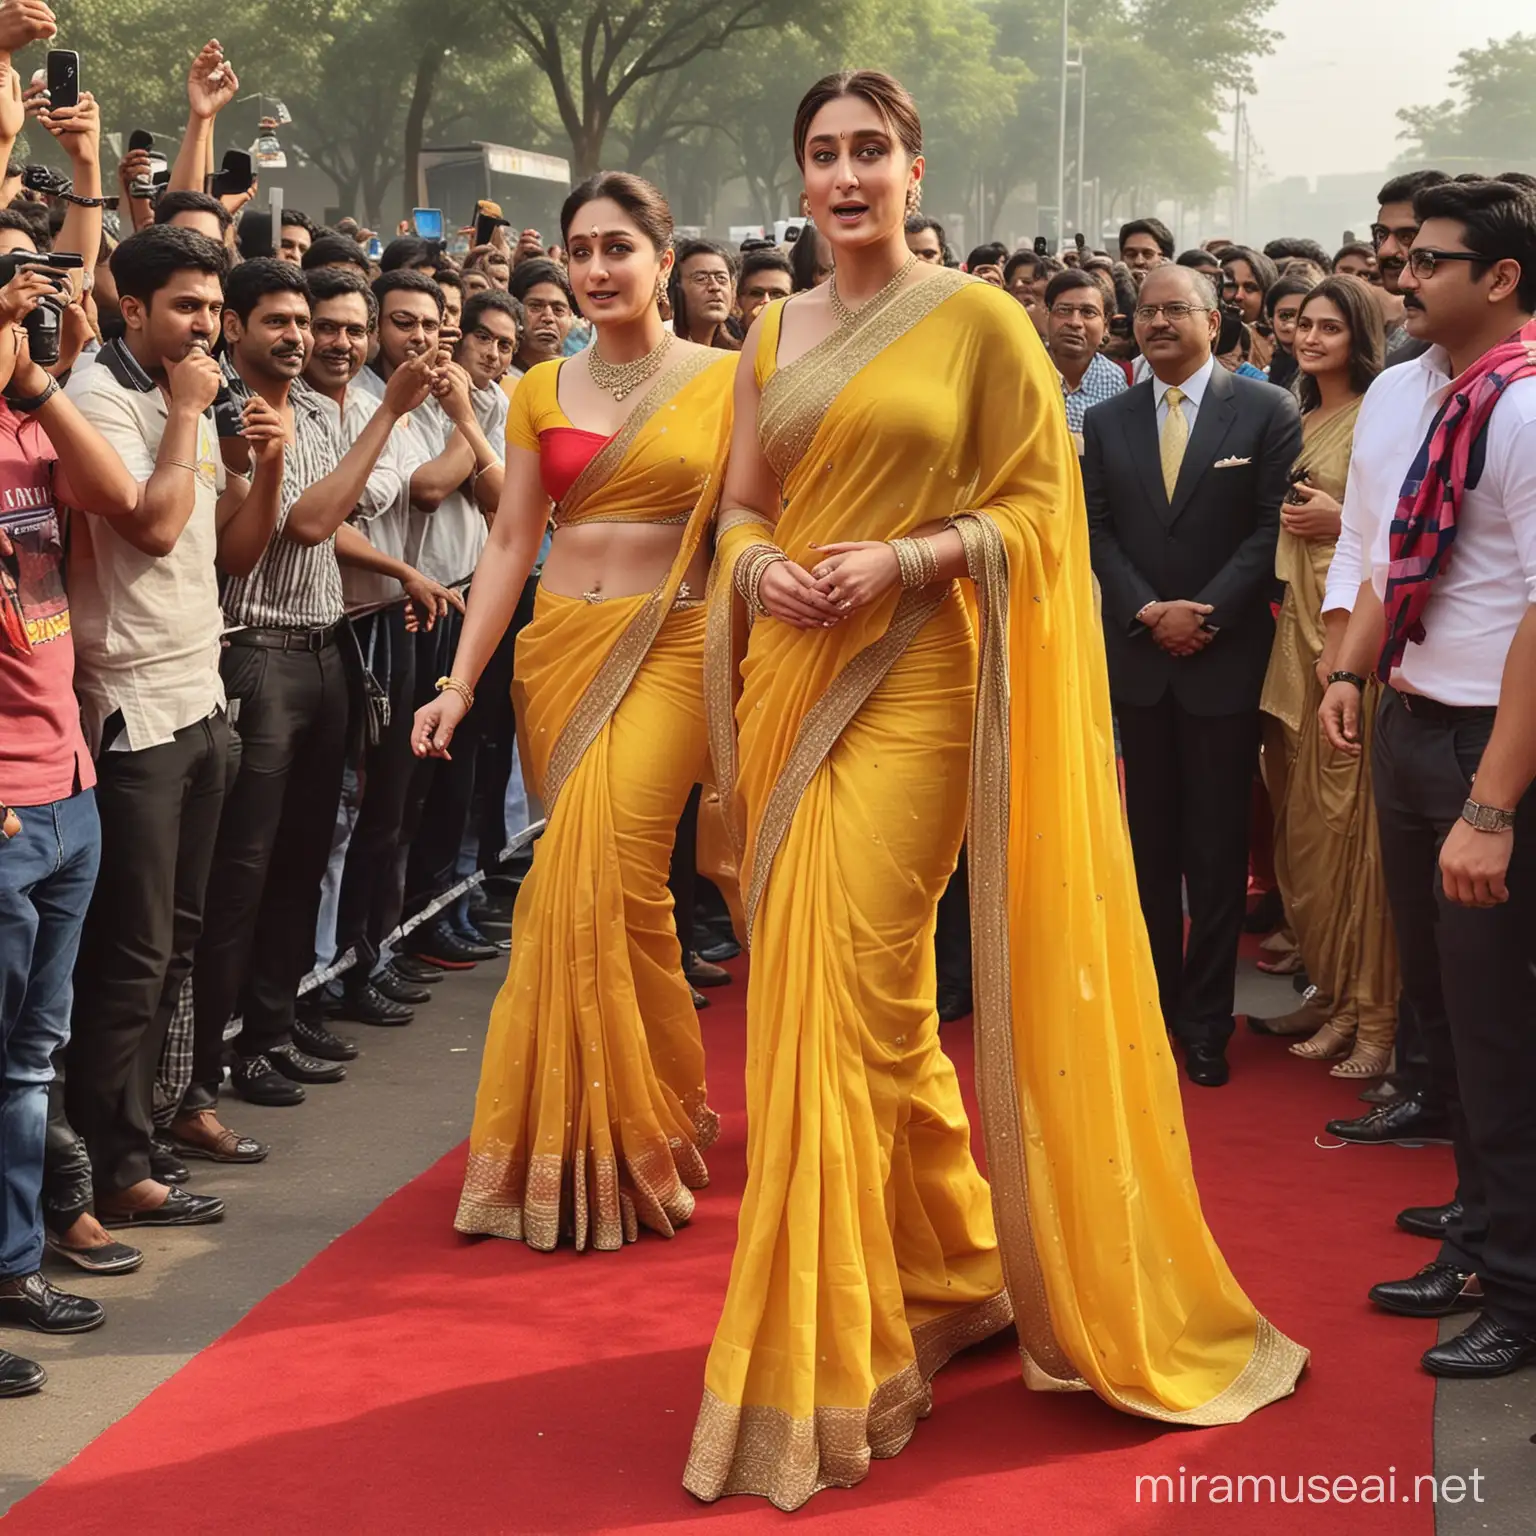 Generate an image showing Bollywood superstar kareena kapoor in yellow saree  on the red carpet, superhero Captain America providing security to kareena kapoor, pushing back the crowd